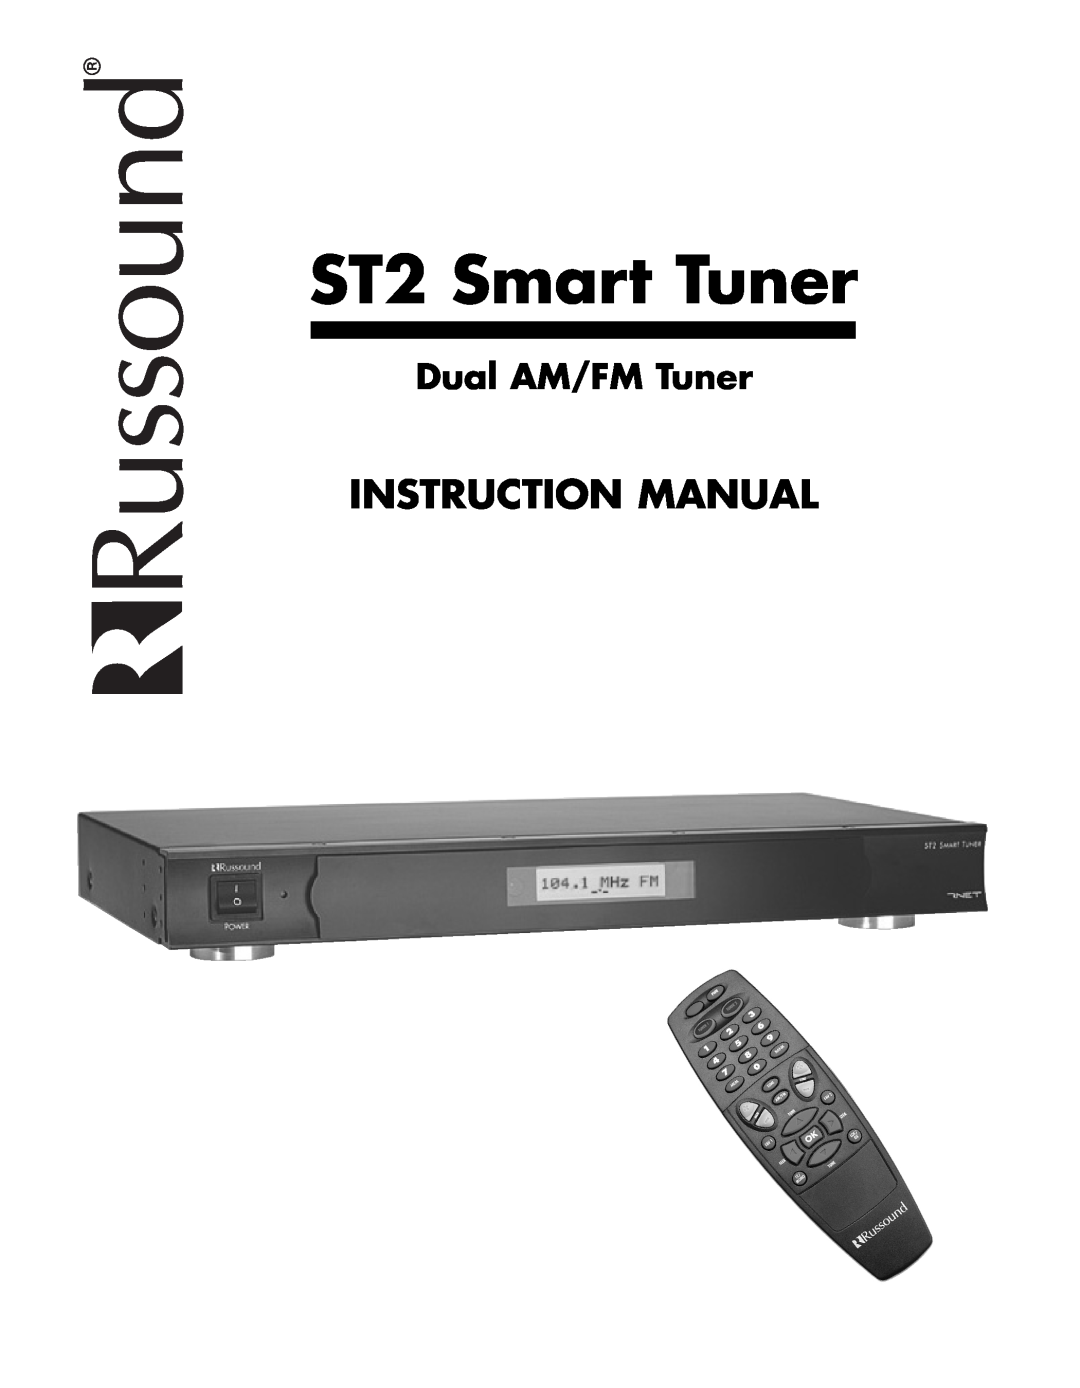 Russound instruction manual ST2 Smart Tuner, Dual AM/FM Tuner 